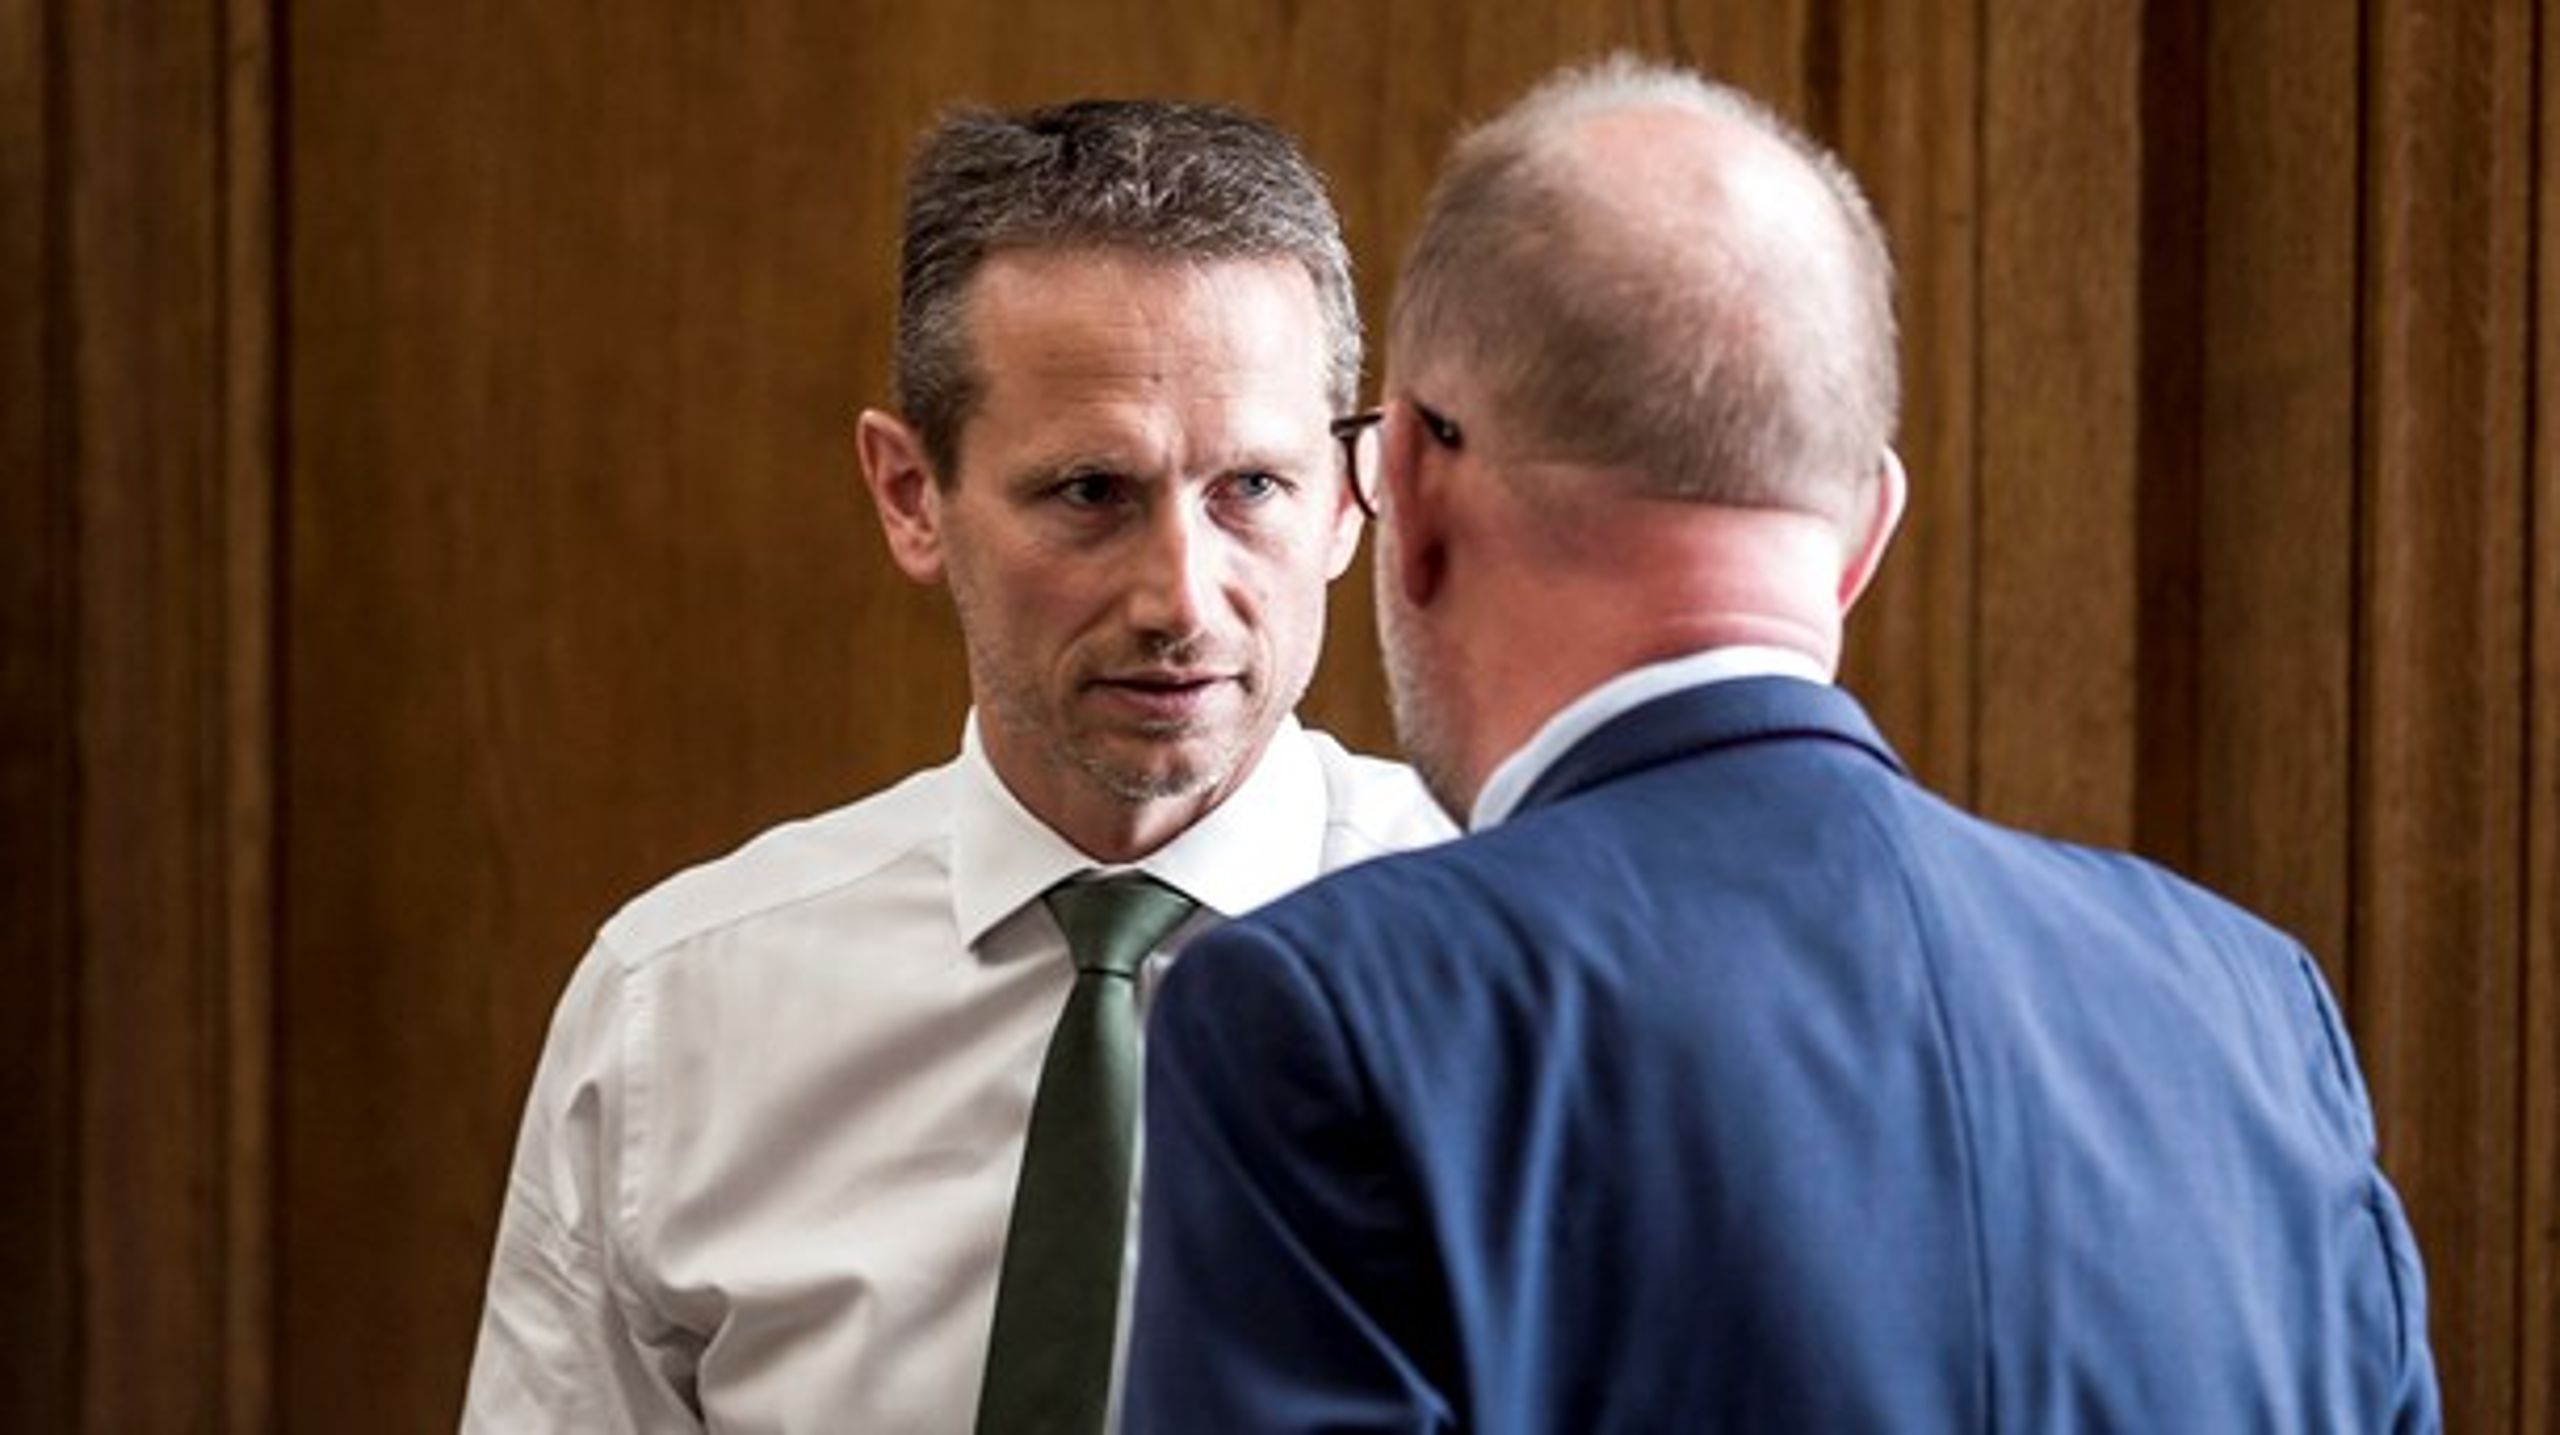 Finansminister Kristian Jensen (V) og klimaminister Lars Chr. Lilleholt (V) i samtale i Folketingssalen i en pause i&nbsp;afslutningsdebatten 30. maj.